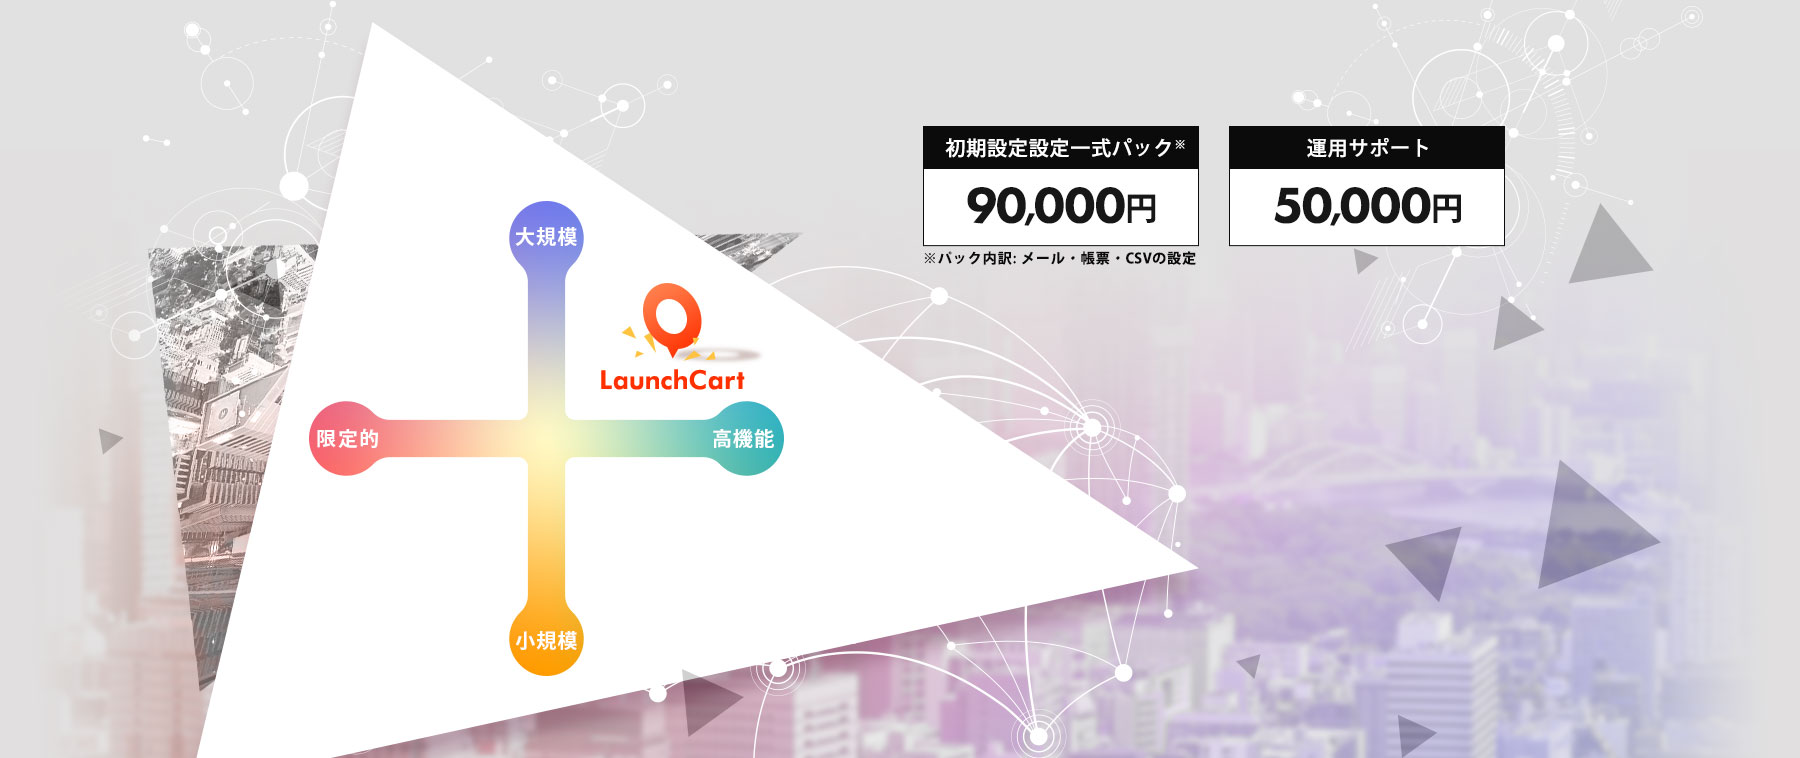 LaunchCartは大規模・高機能向け